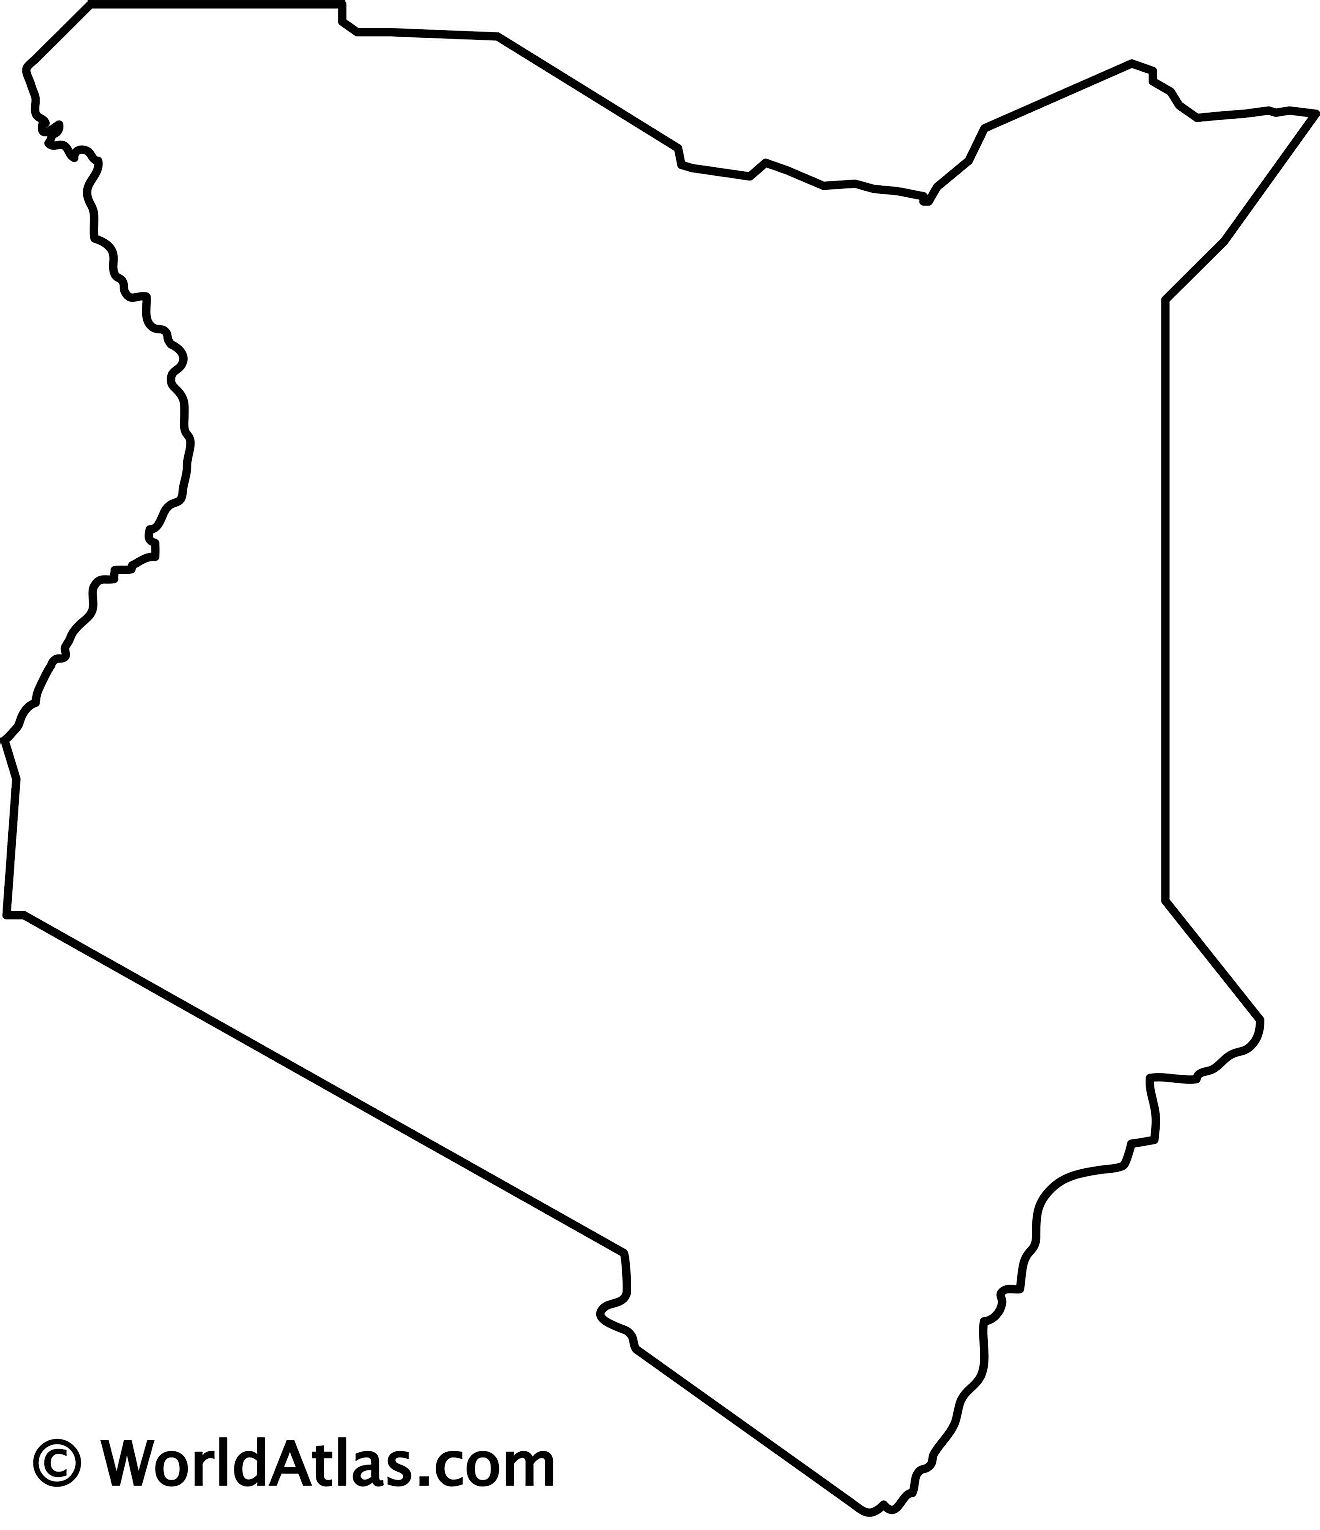 Blank Outline Map of Kenya